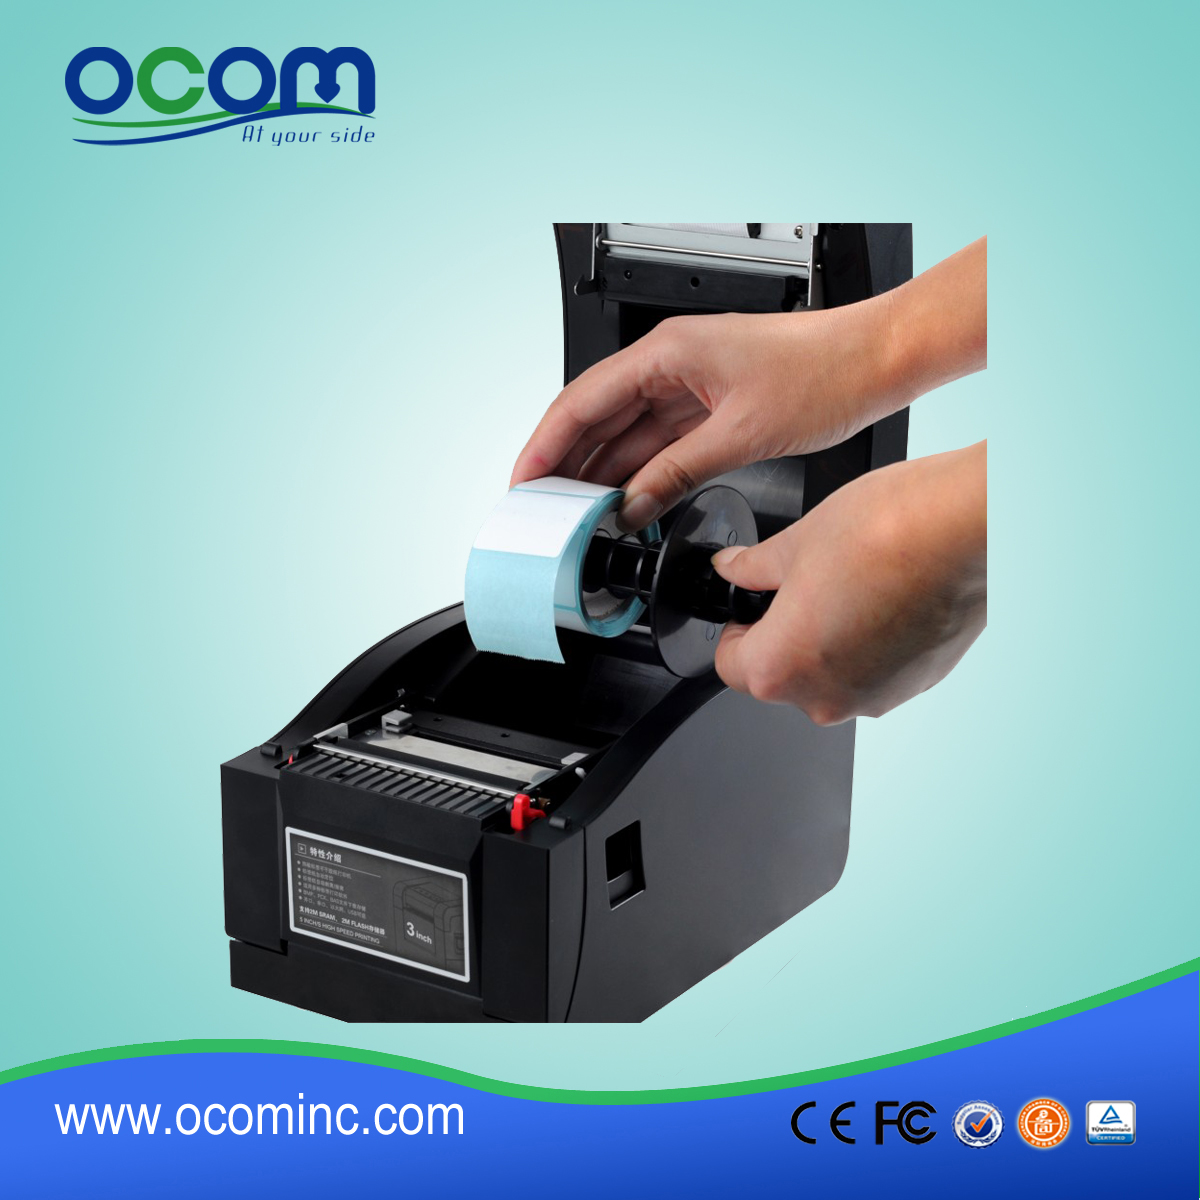 3 дюйма этикетки термопринтер, принтер наклейка (ОЦБФ-005)